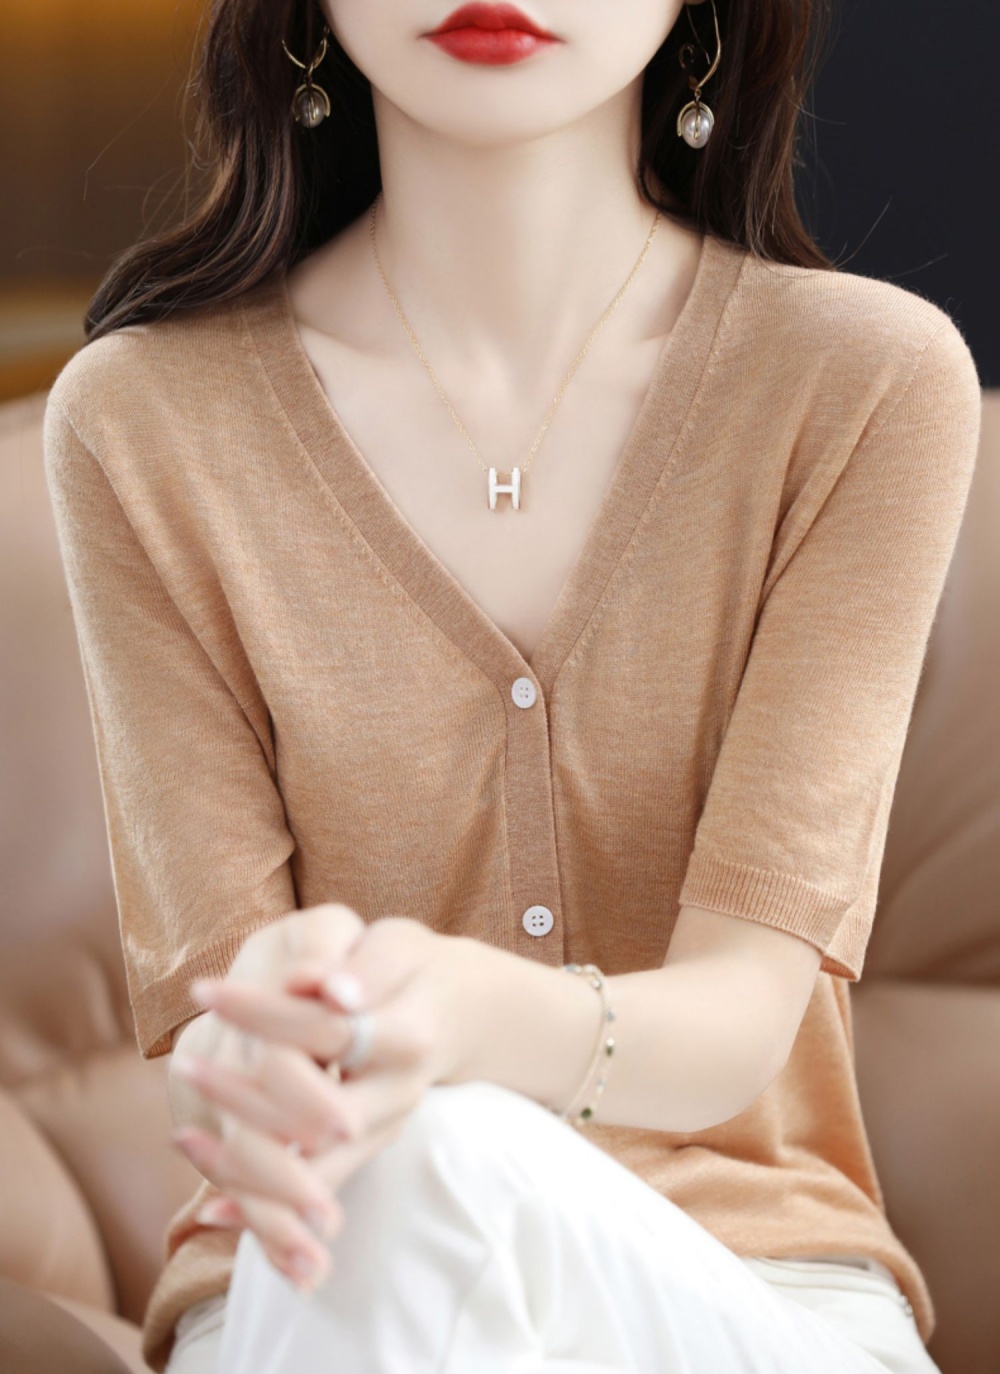 Short sleeve V-neck tops flax knitted coat for women